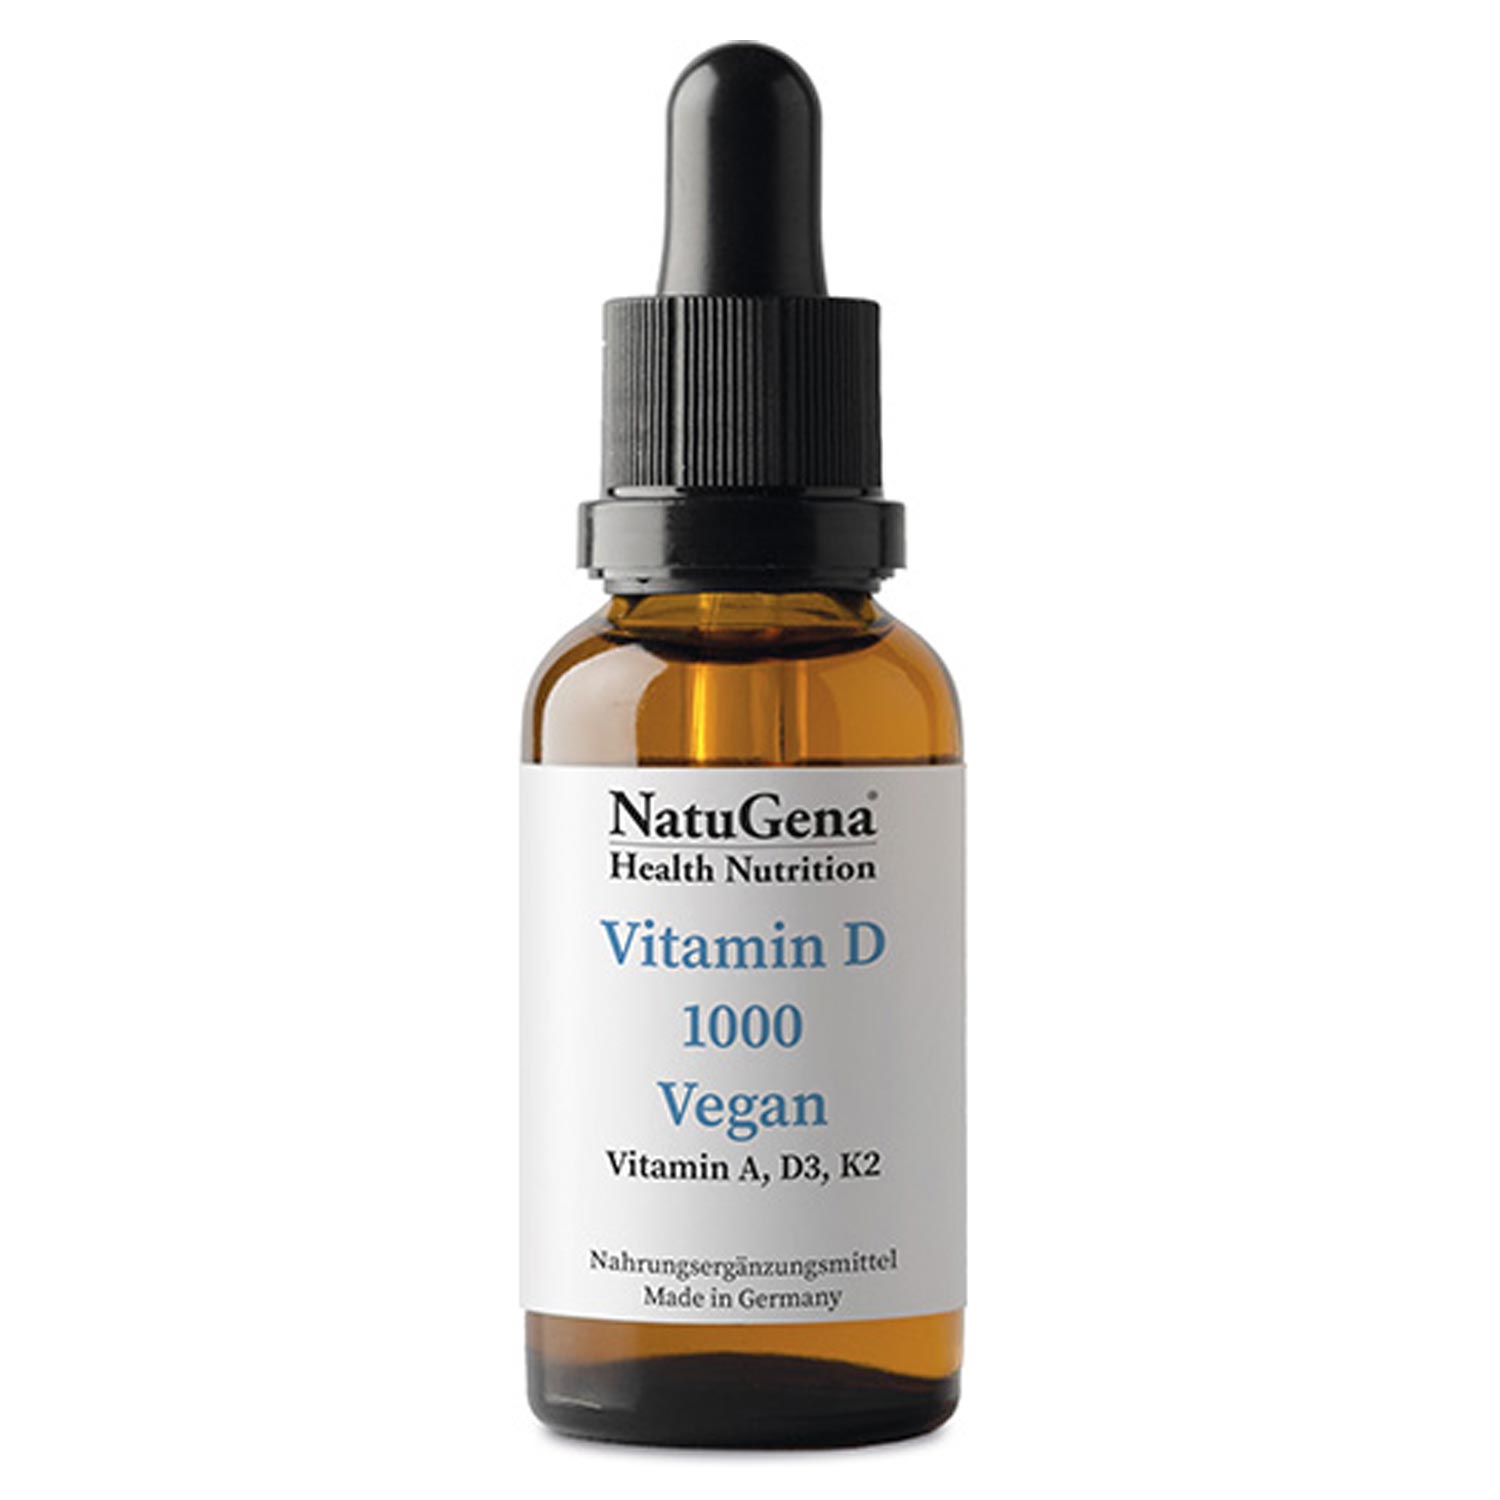 Vitamin D 1000 Vegan von NatuGena - 15ml